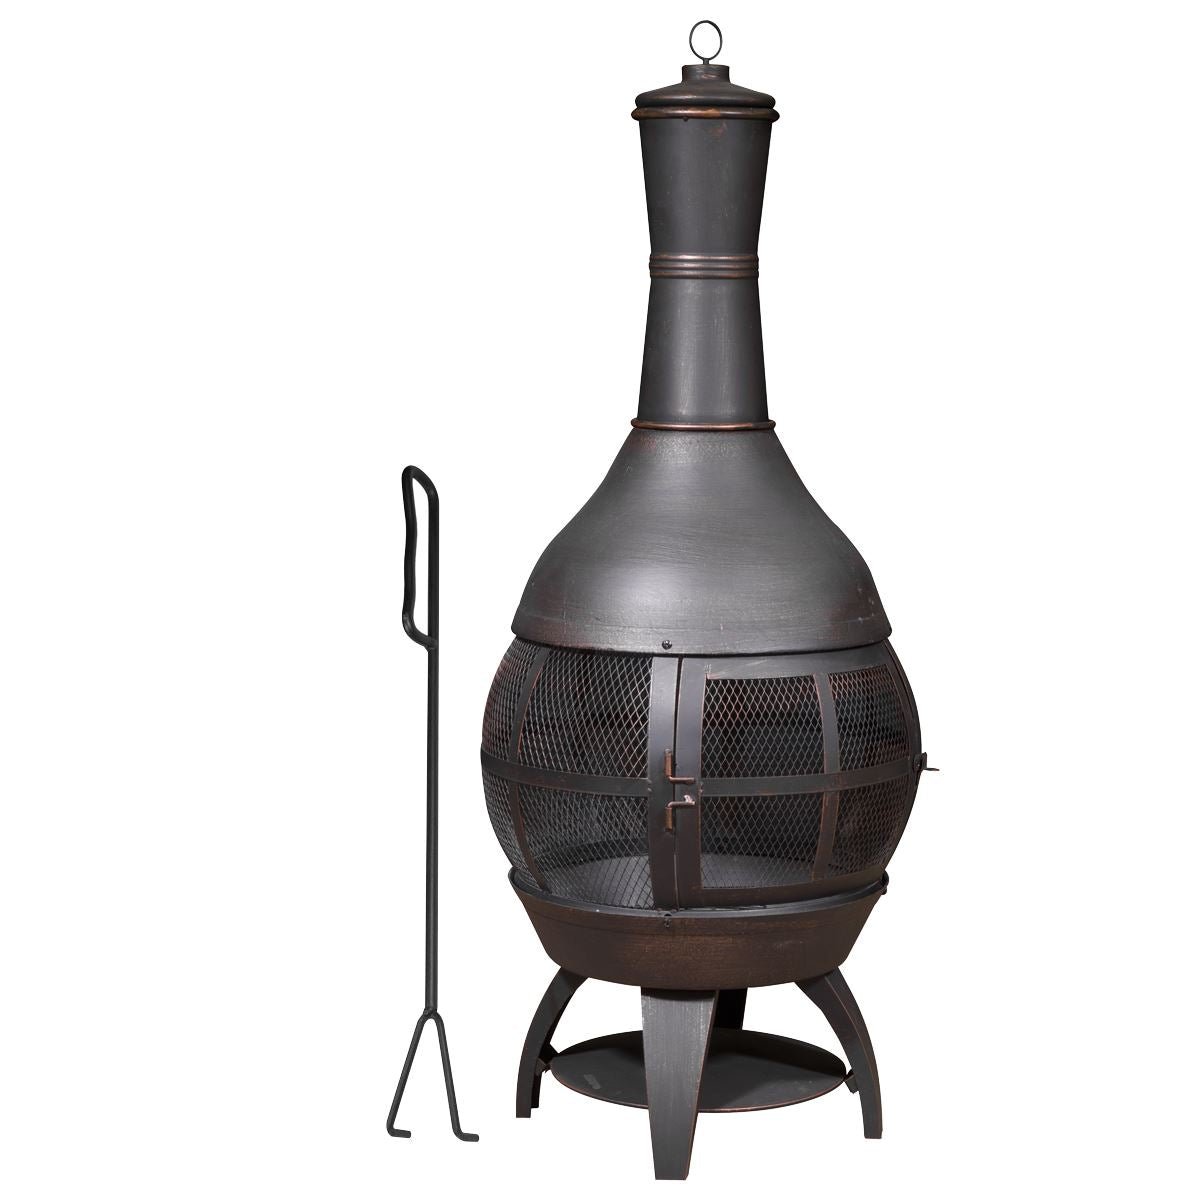 Dellonda Deluxe 360° Chiminea/Fire Pit/Outdoor Heater - Antique Bronze Finish - DG112